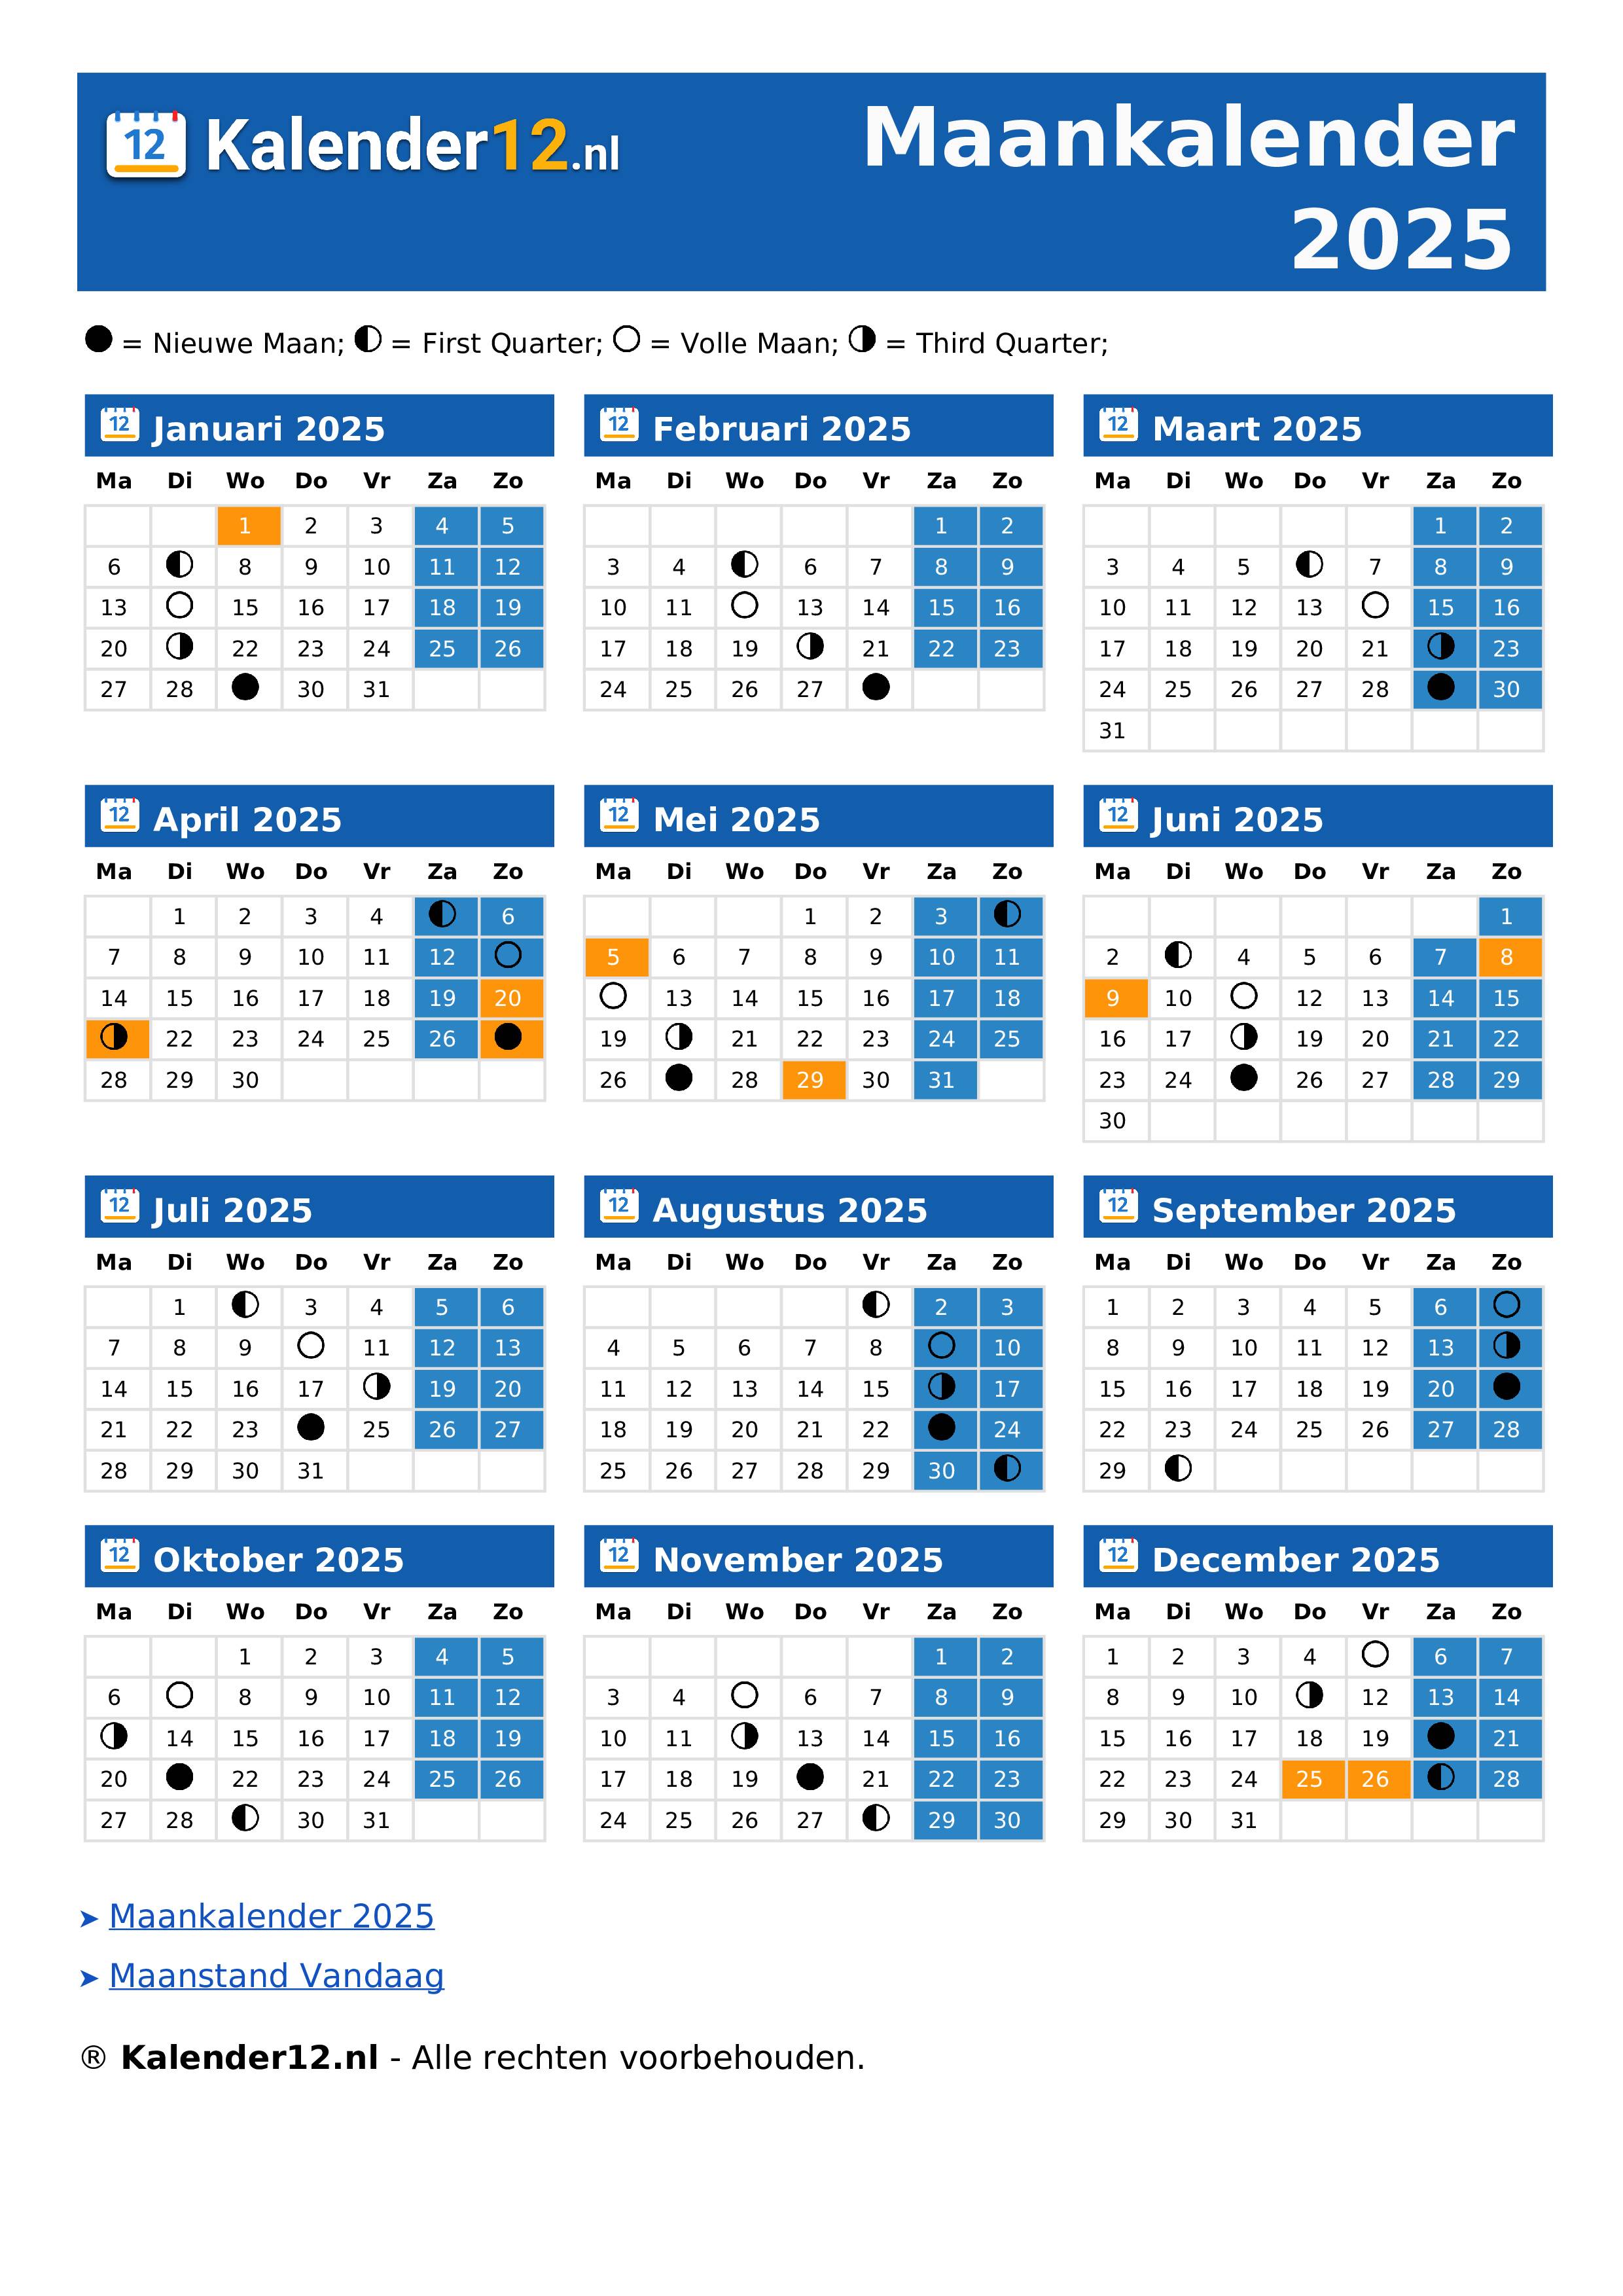 Maankalender 2025